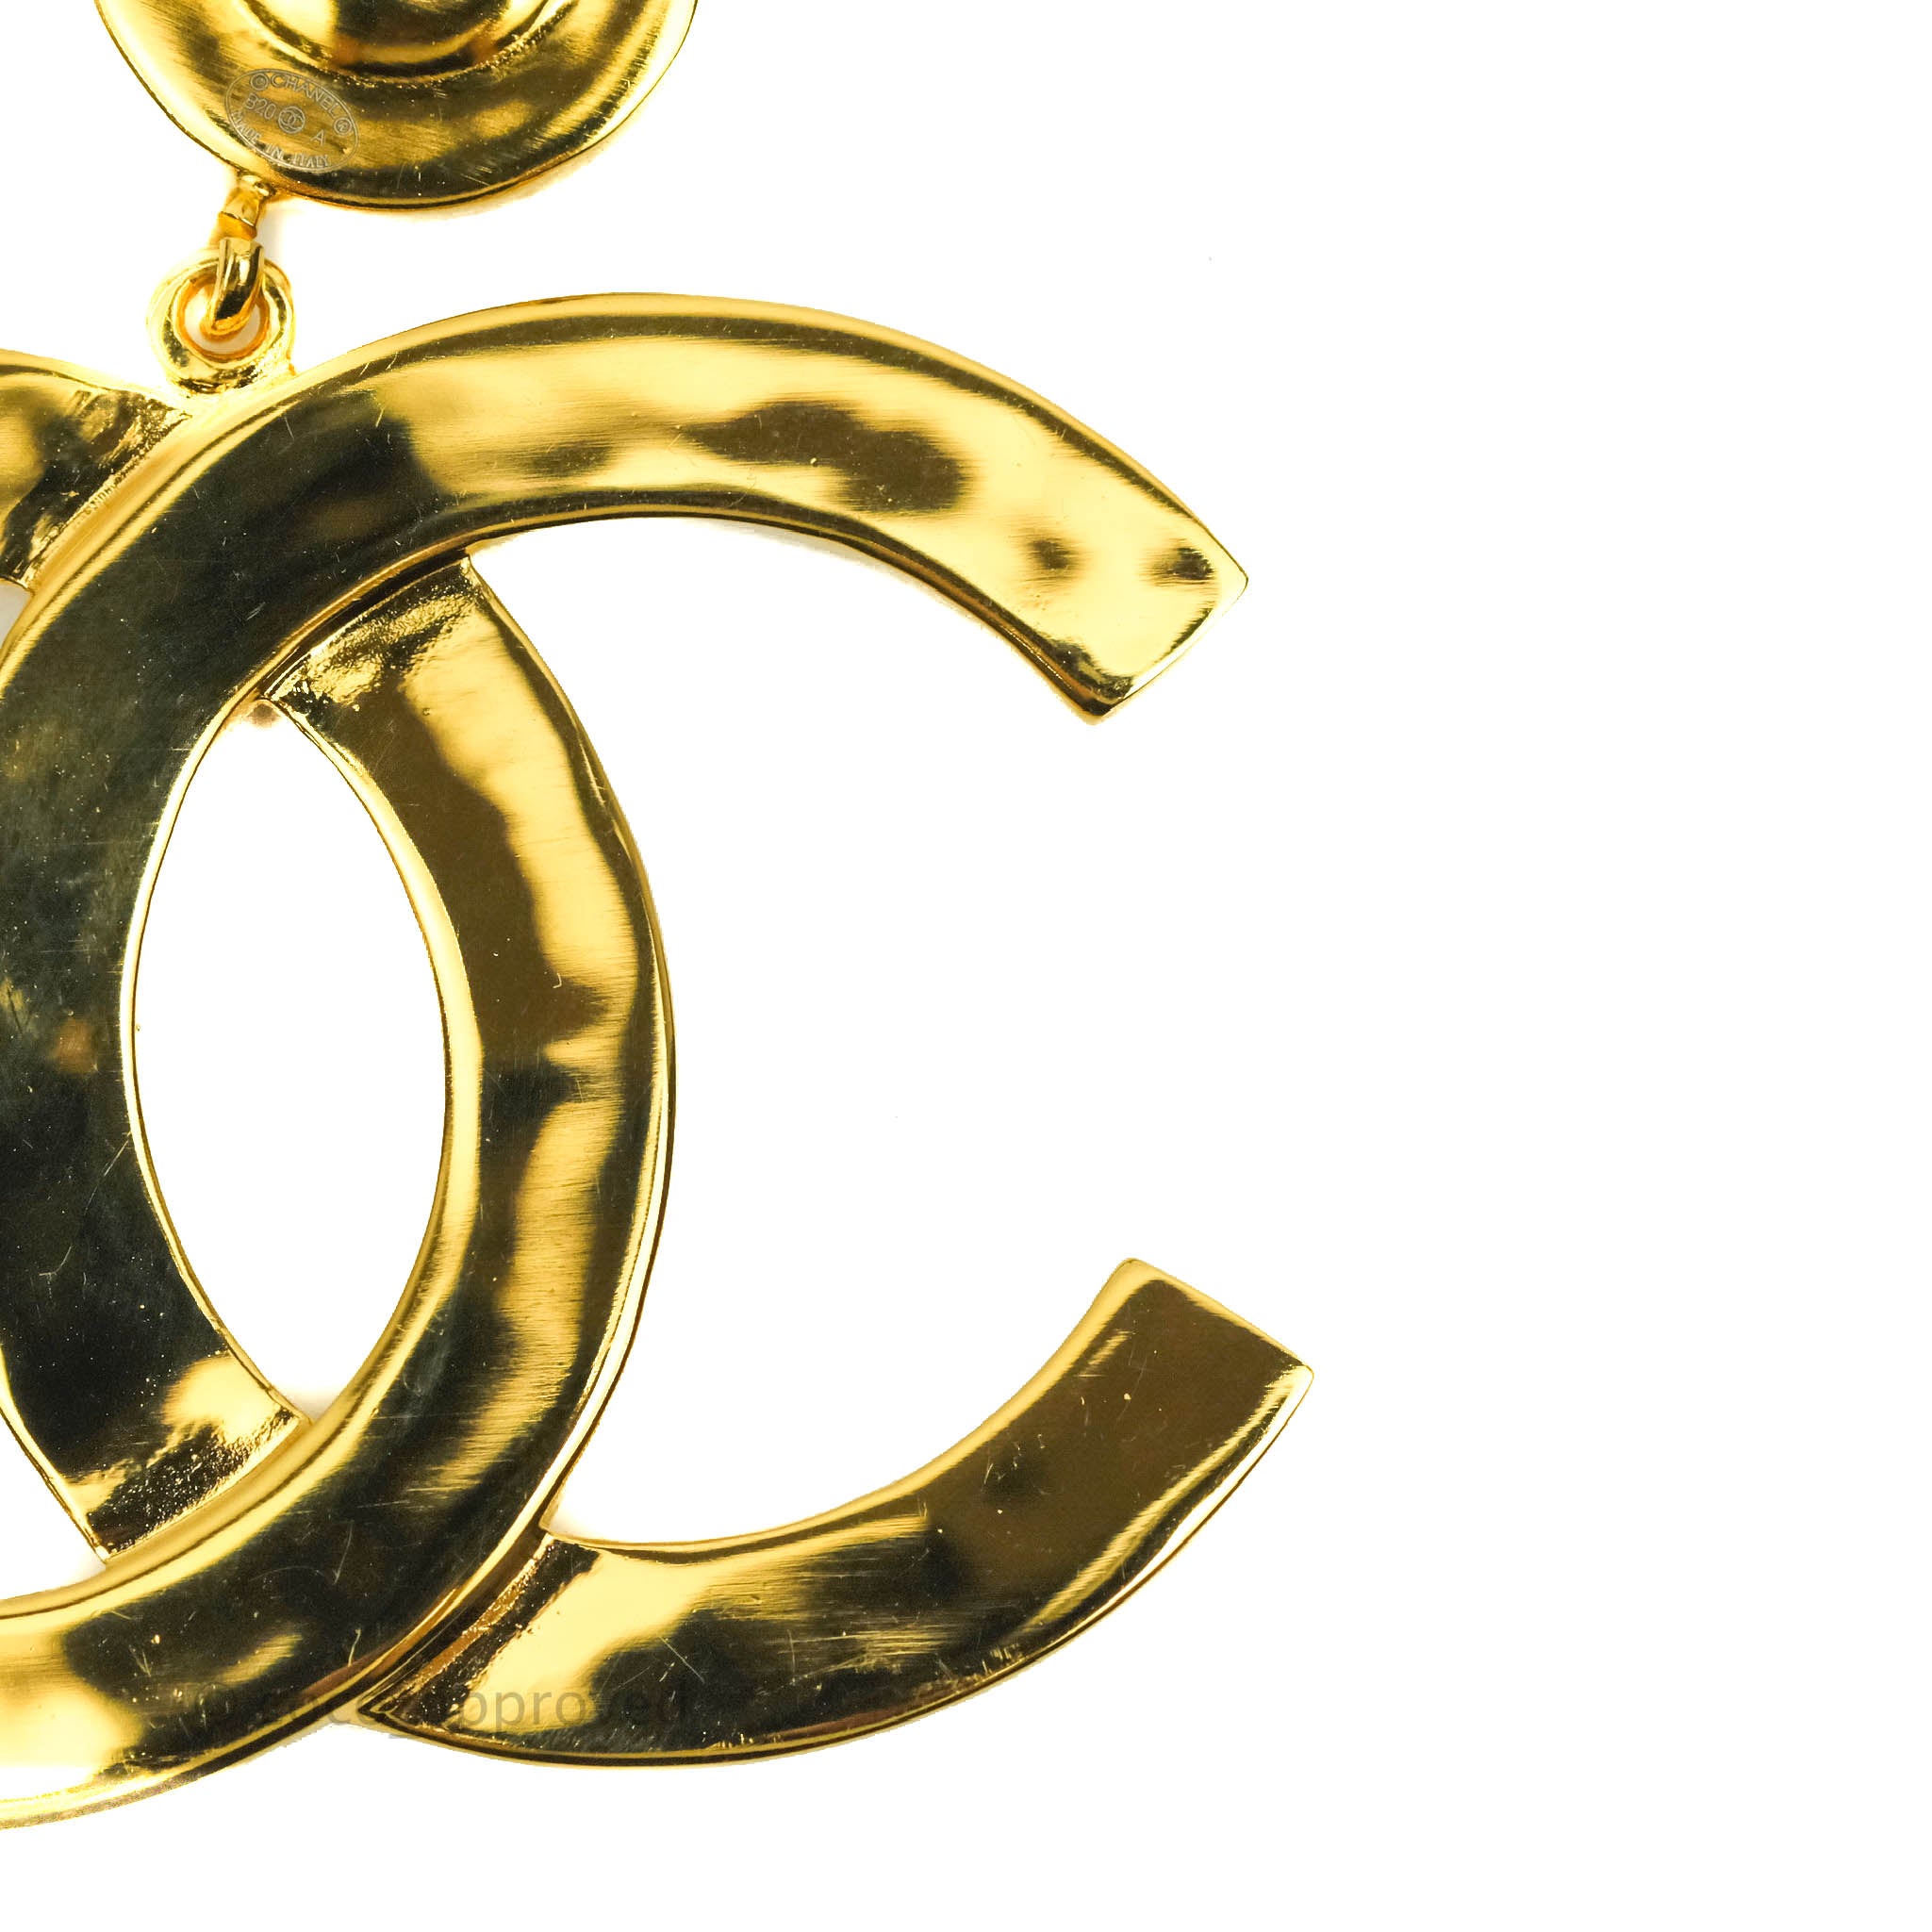 Chanel CC pierced earring w/lucite drops - Vintage Lux